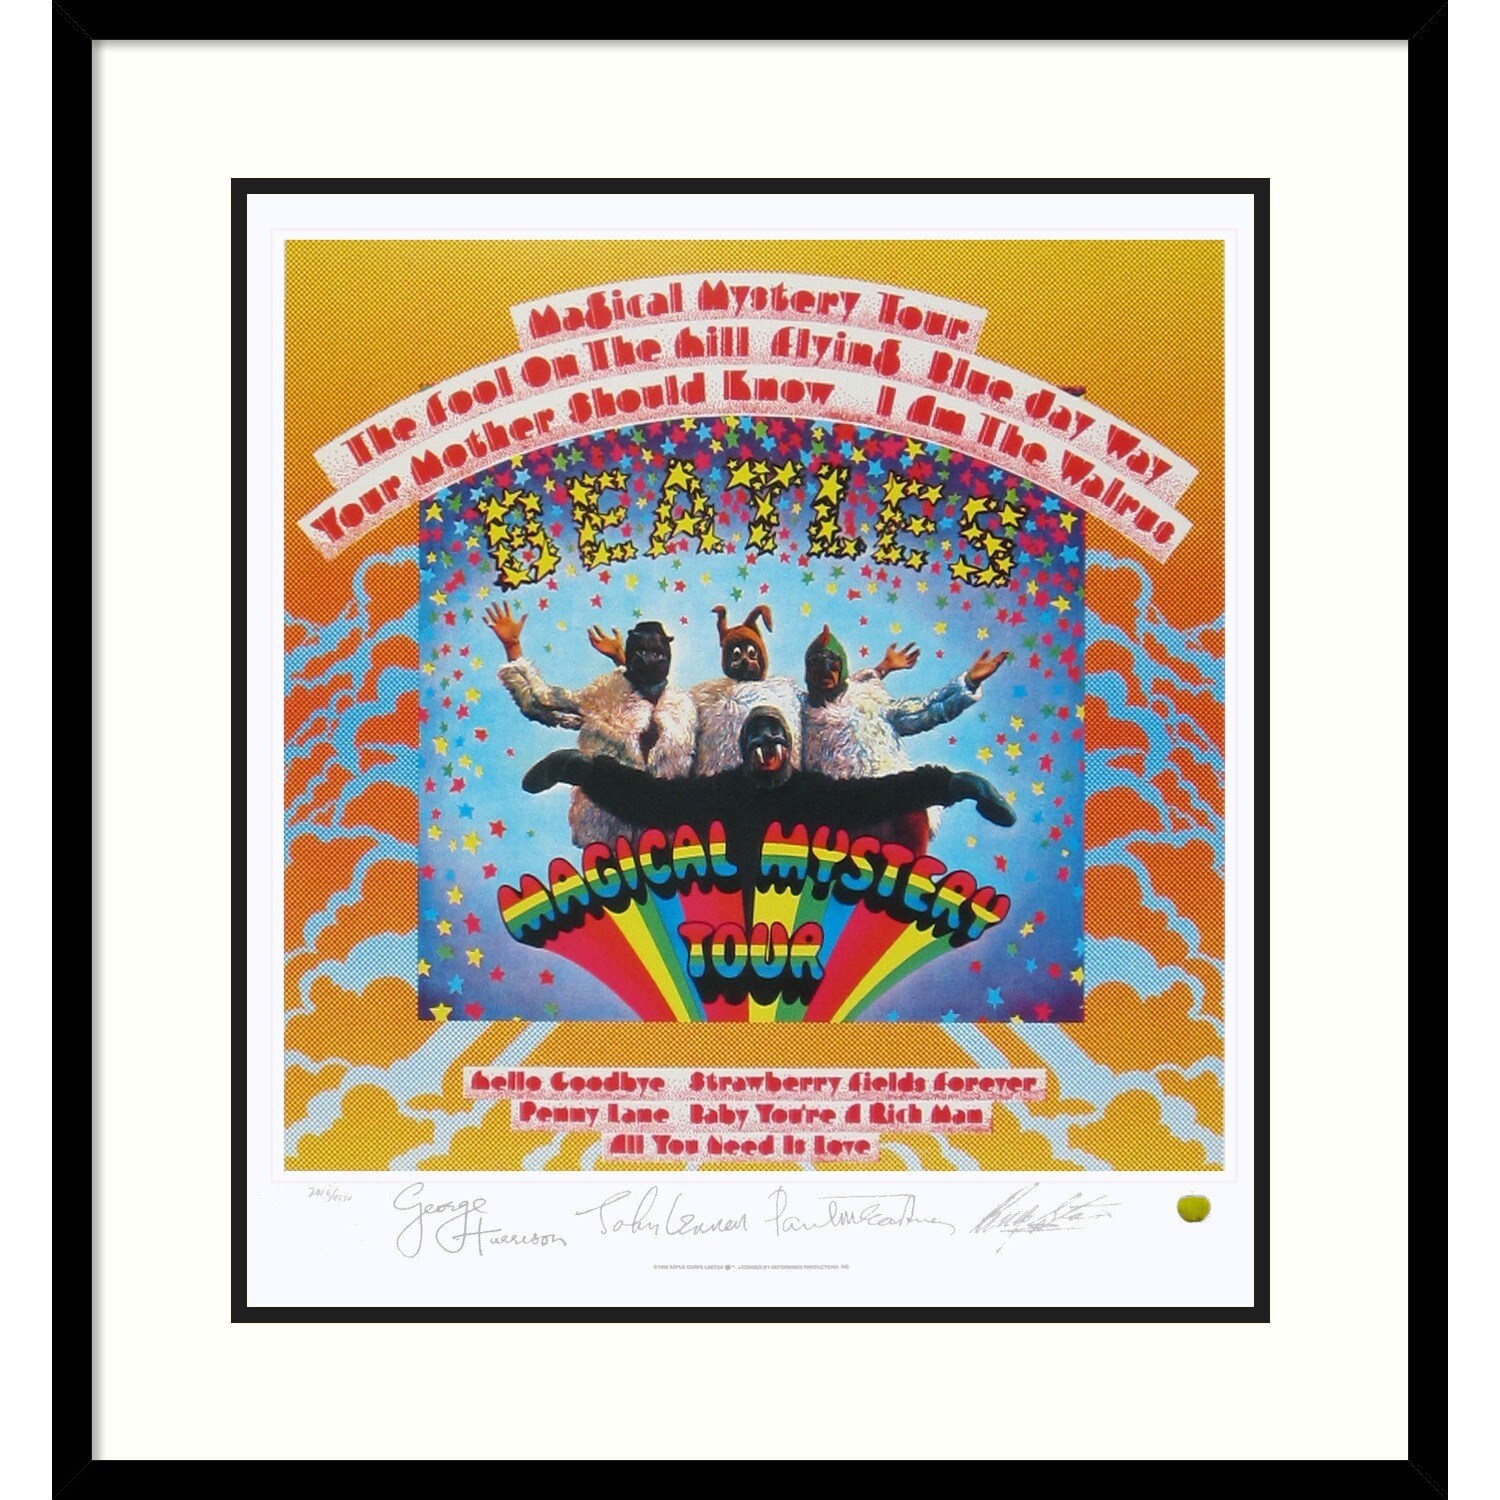 The Beatles Magical Mystery Tour (Album Cover) Framed Art Print